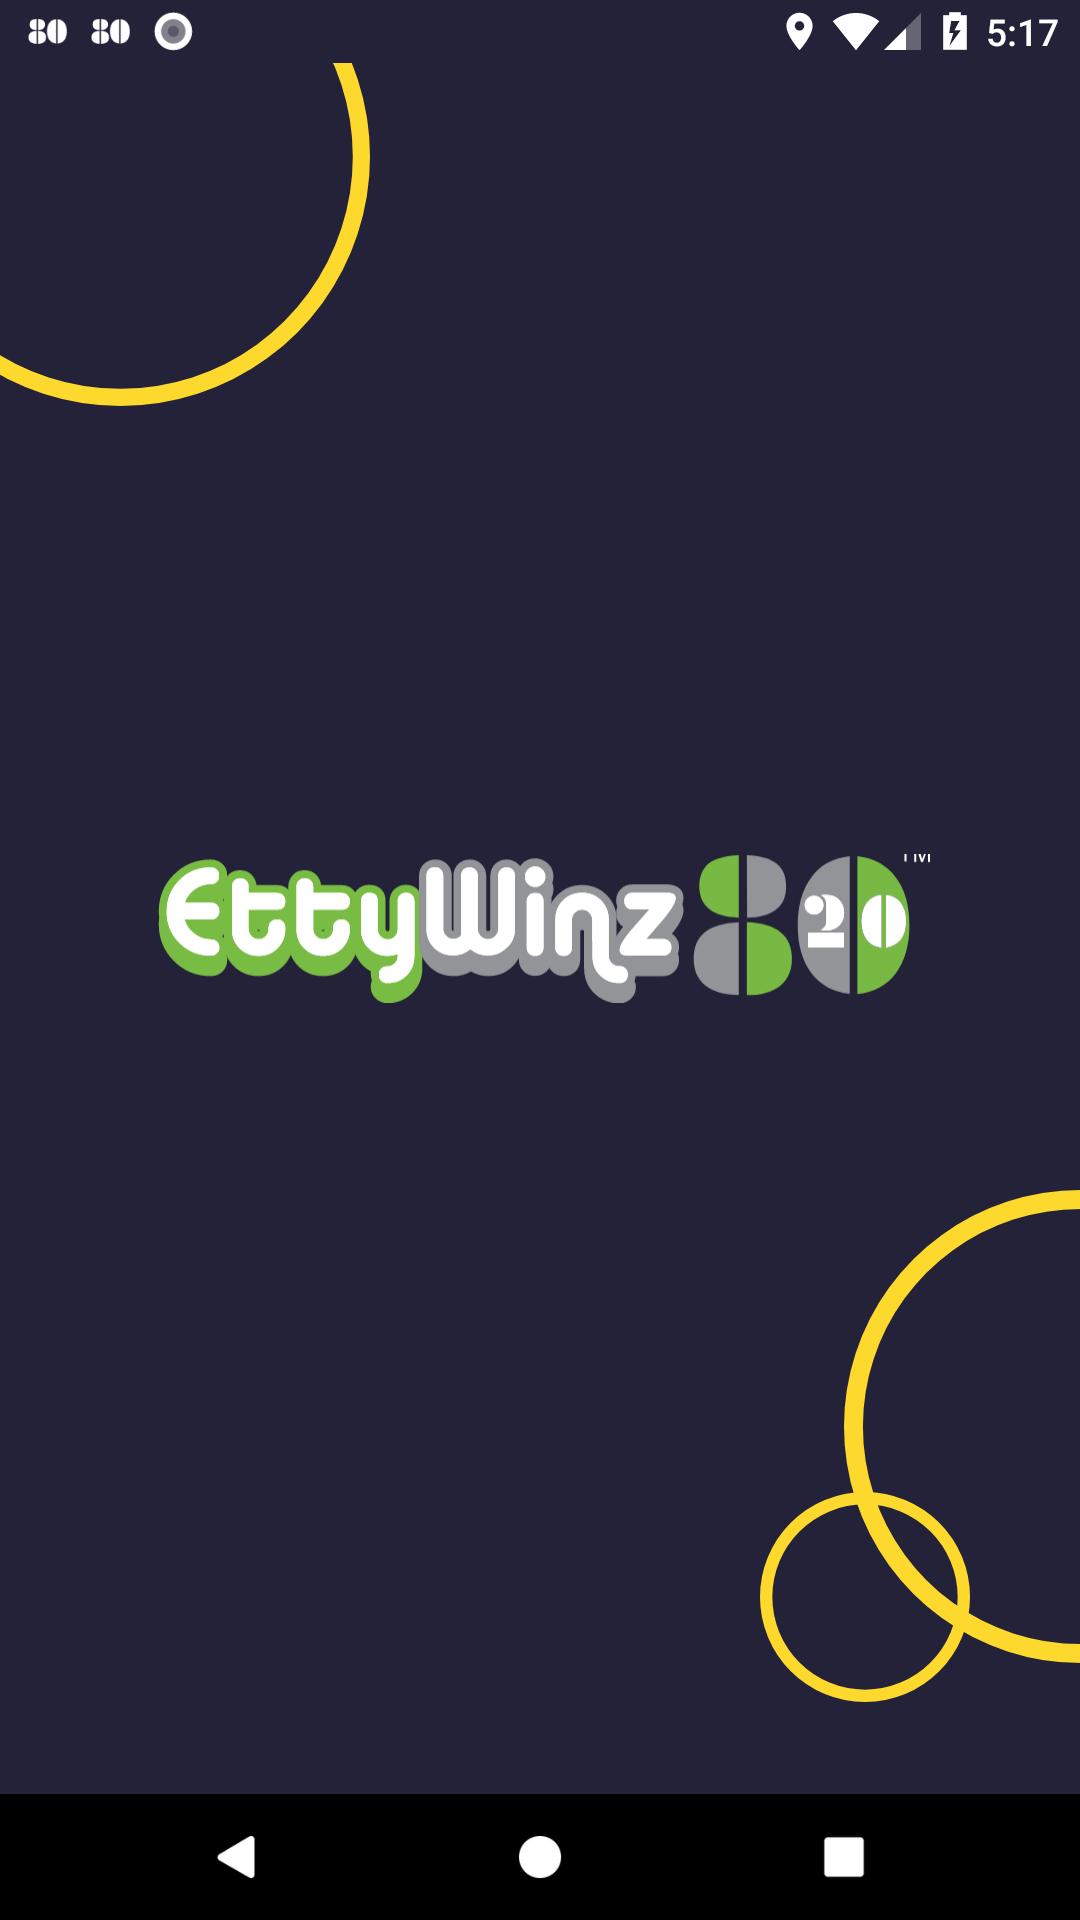 Ettywinz 8020 - Easy Quiz(Trivia) Game 1.5.5 Screenshot 1